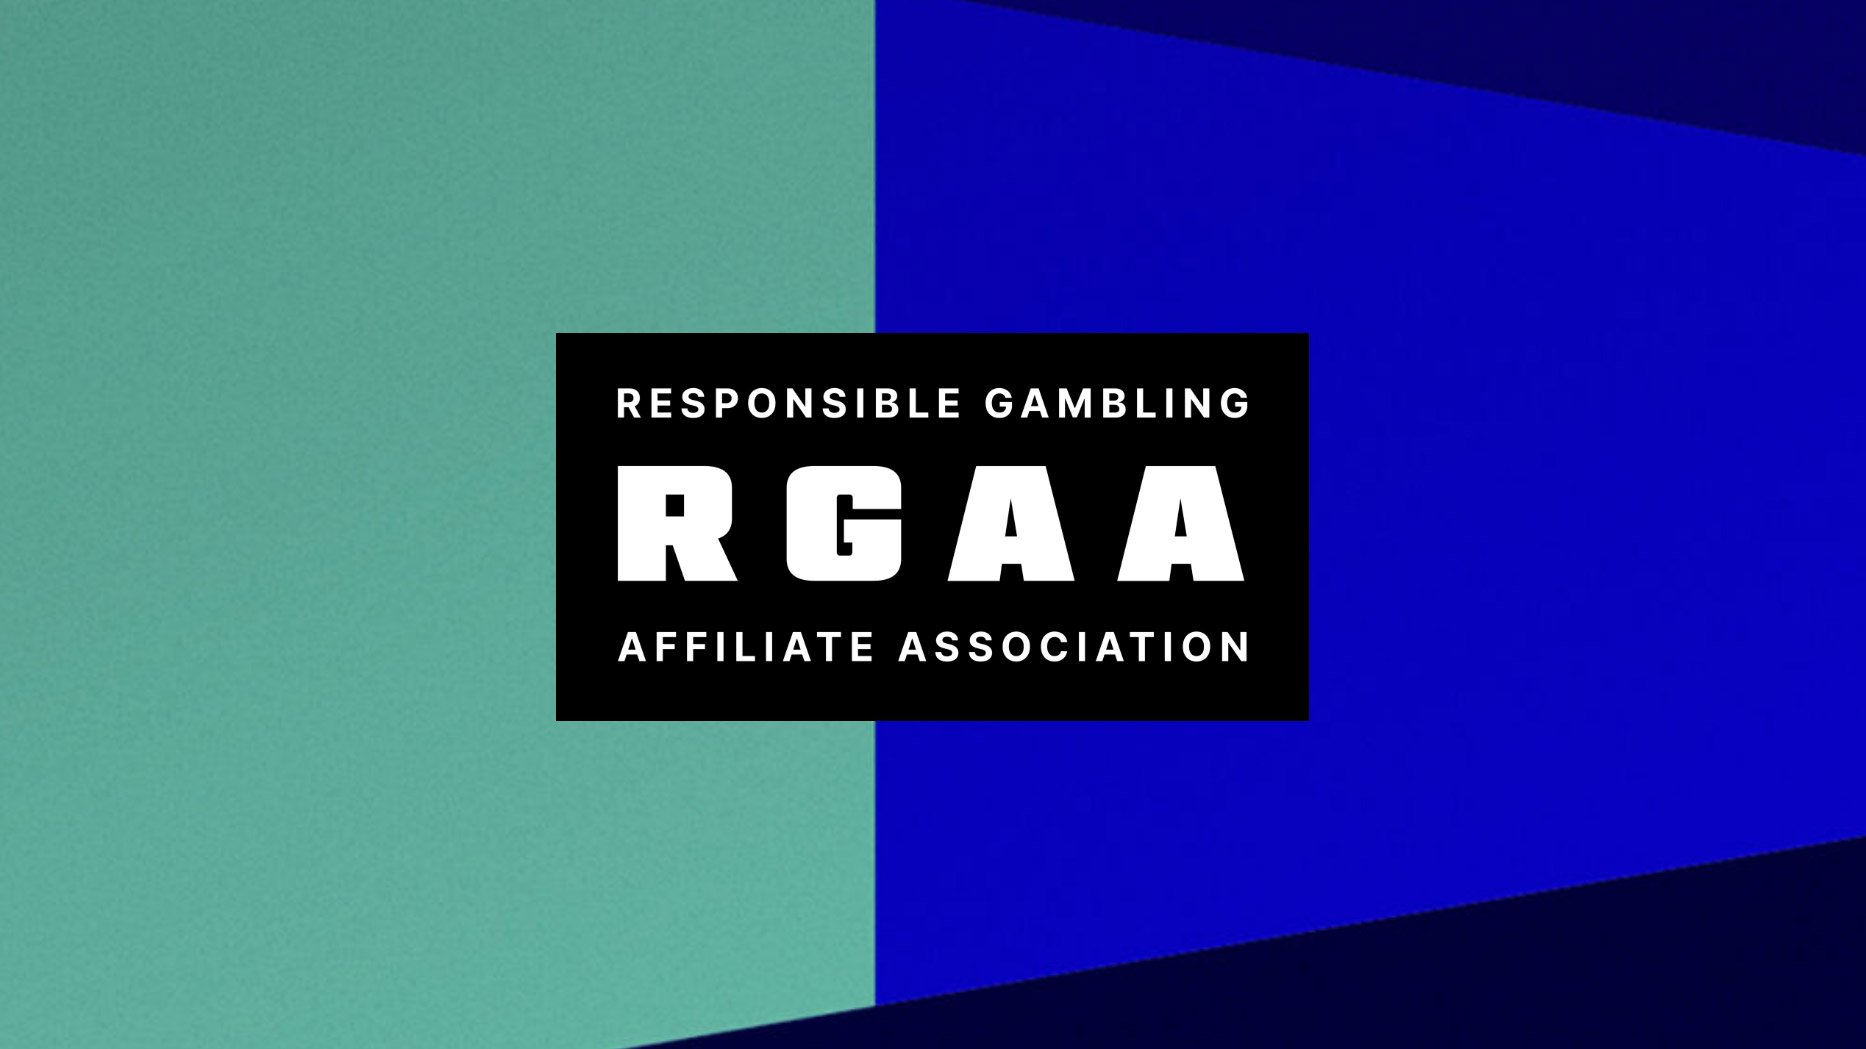 Responsible Gambling Affiliate Association launches membership program | Yogonet International